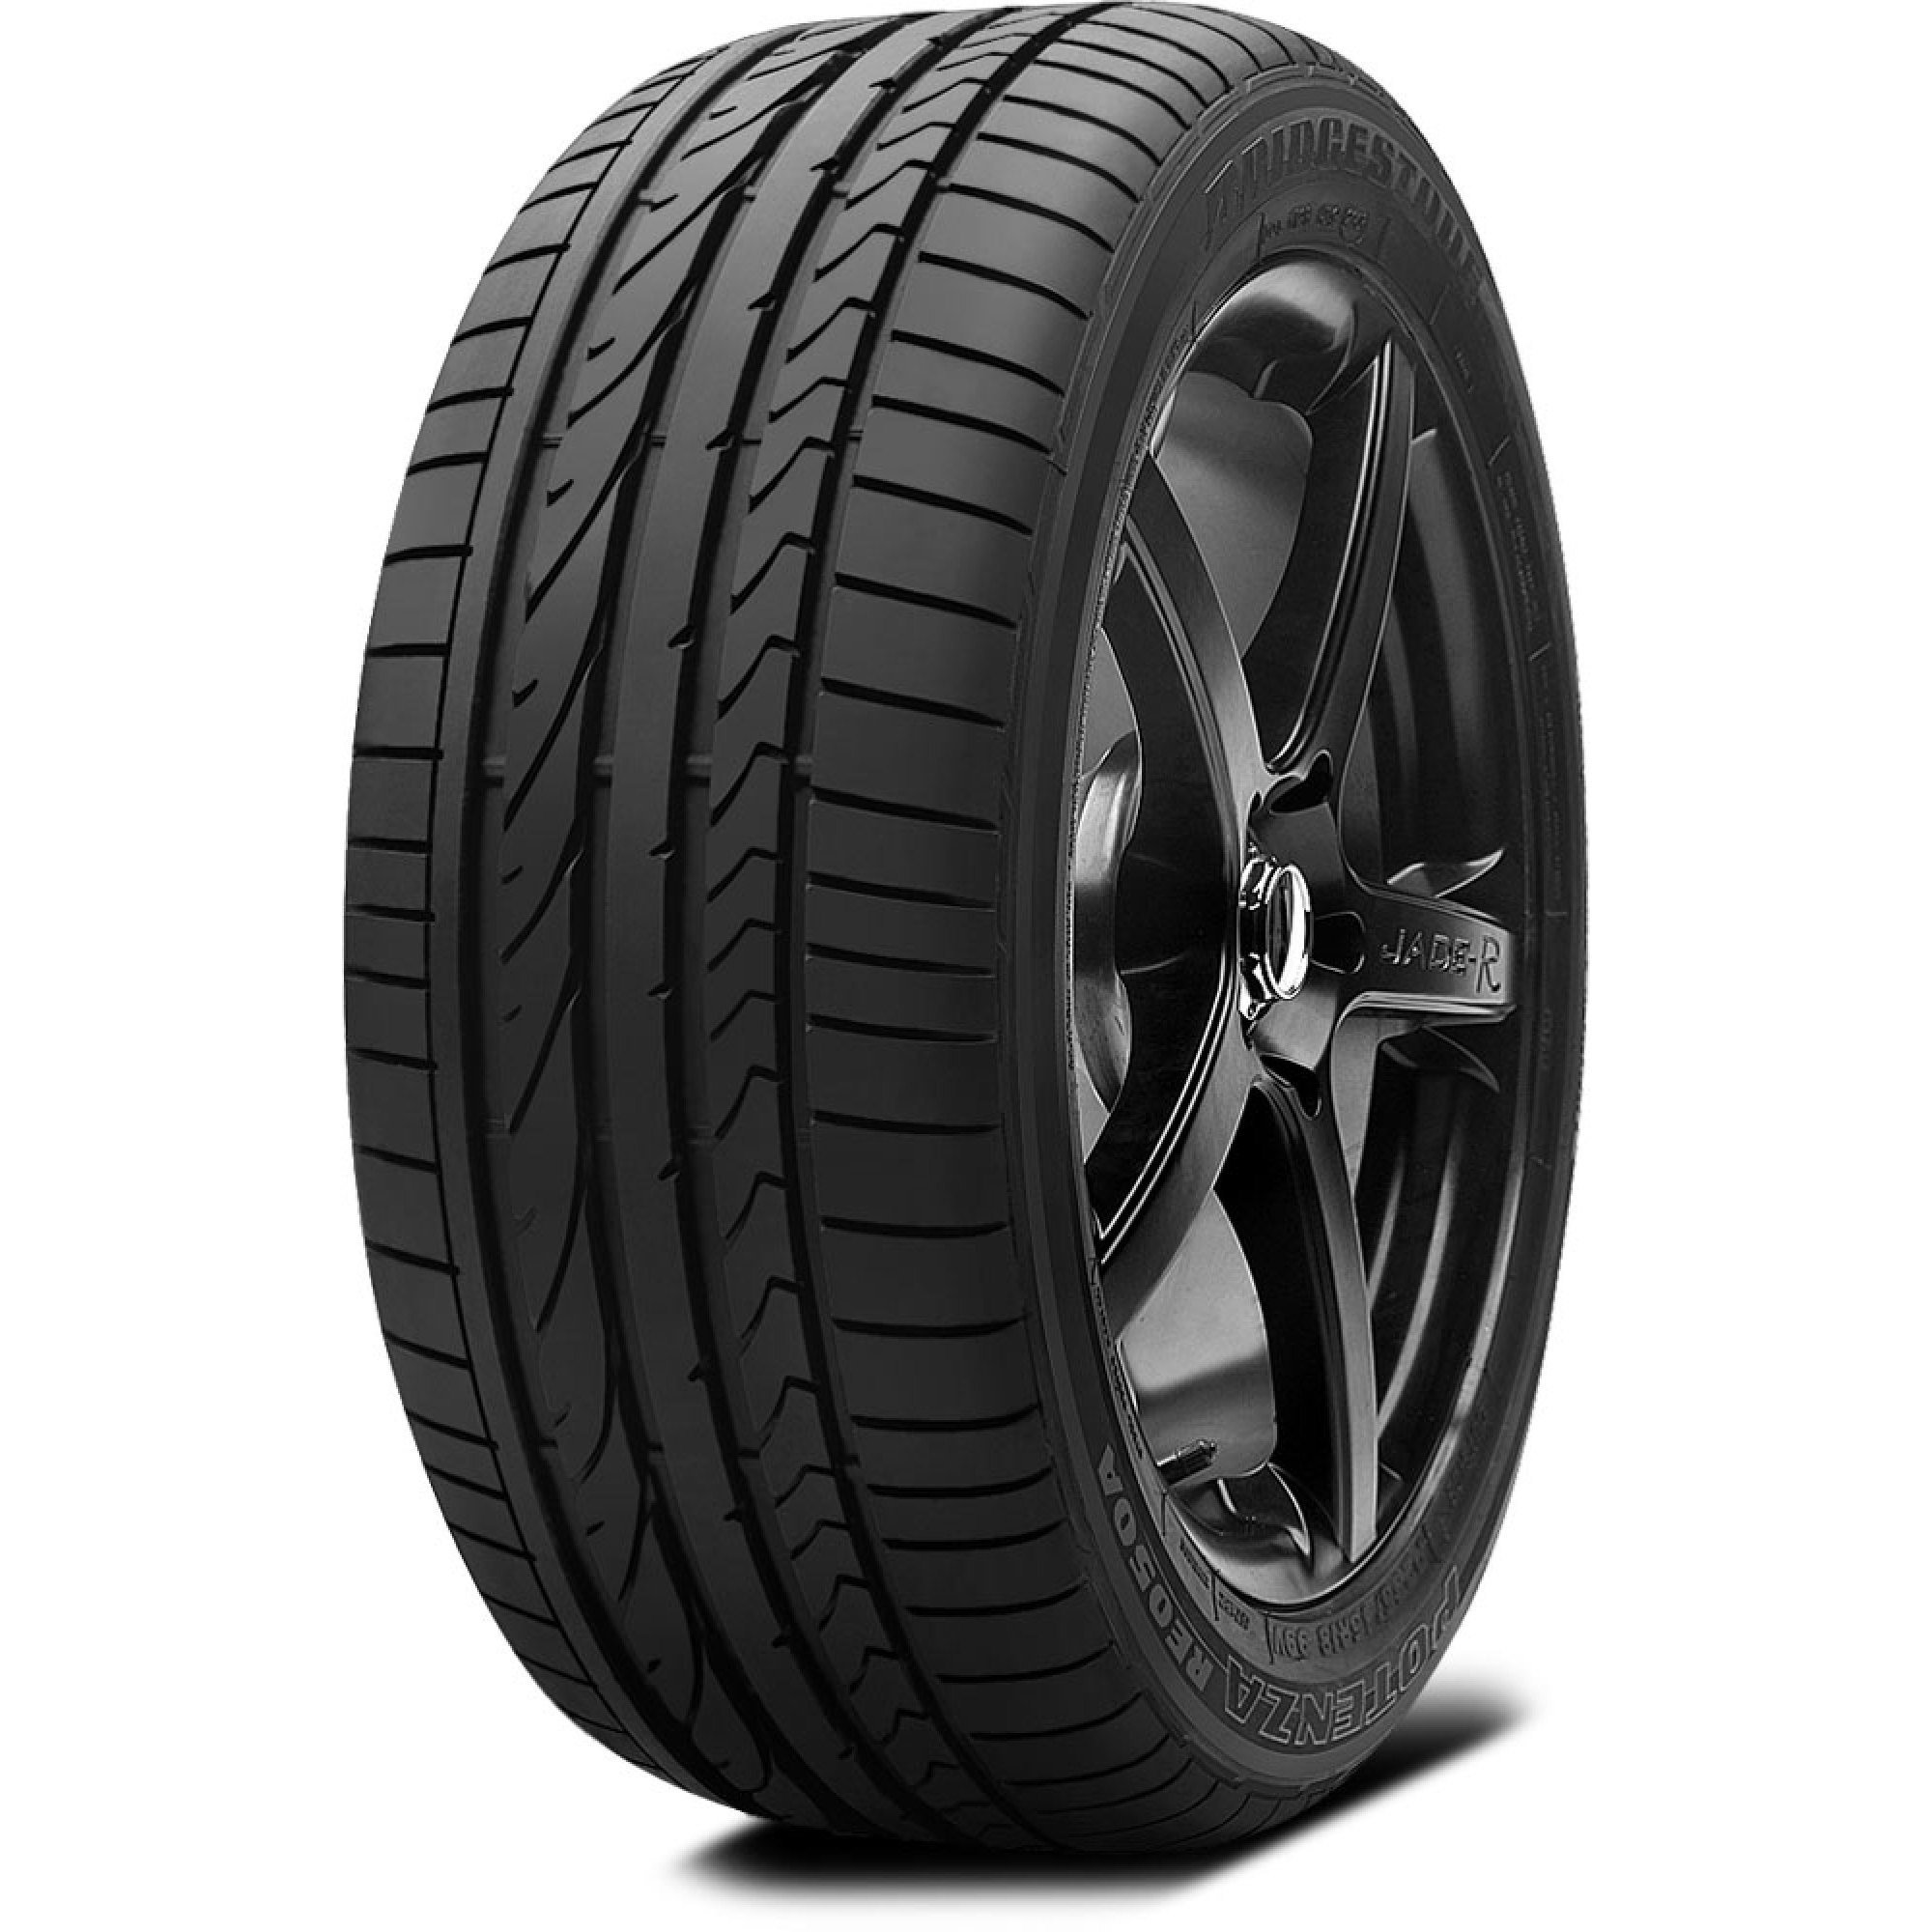 Bridgestone Potenza RE050A Car Tyre Reviews & Prices